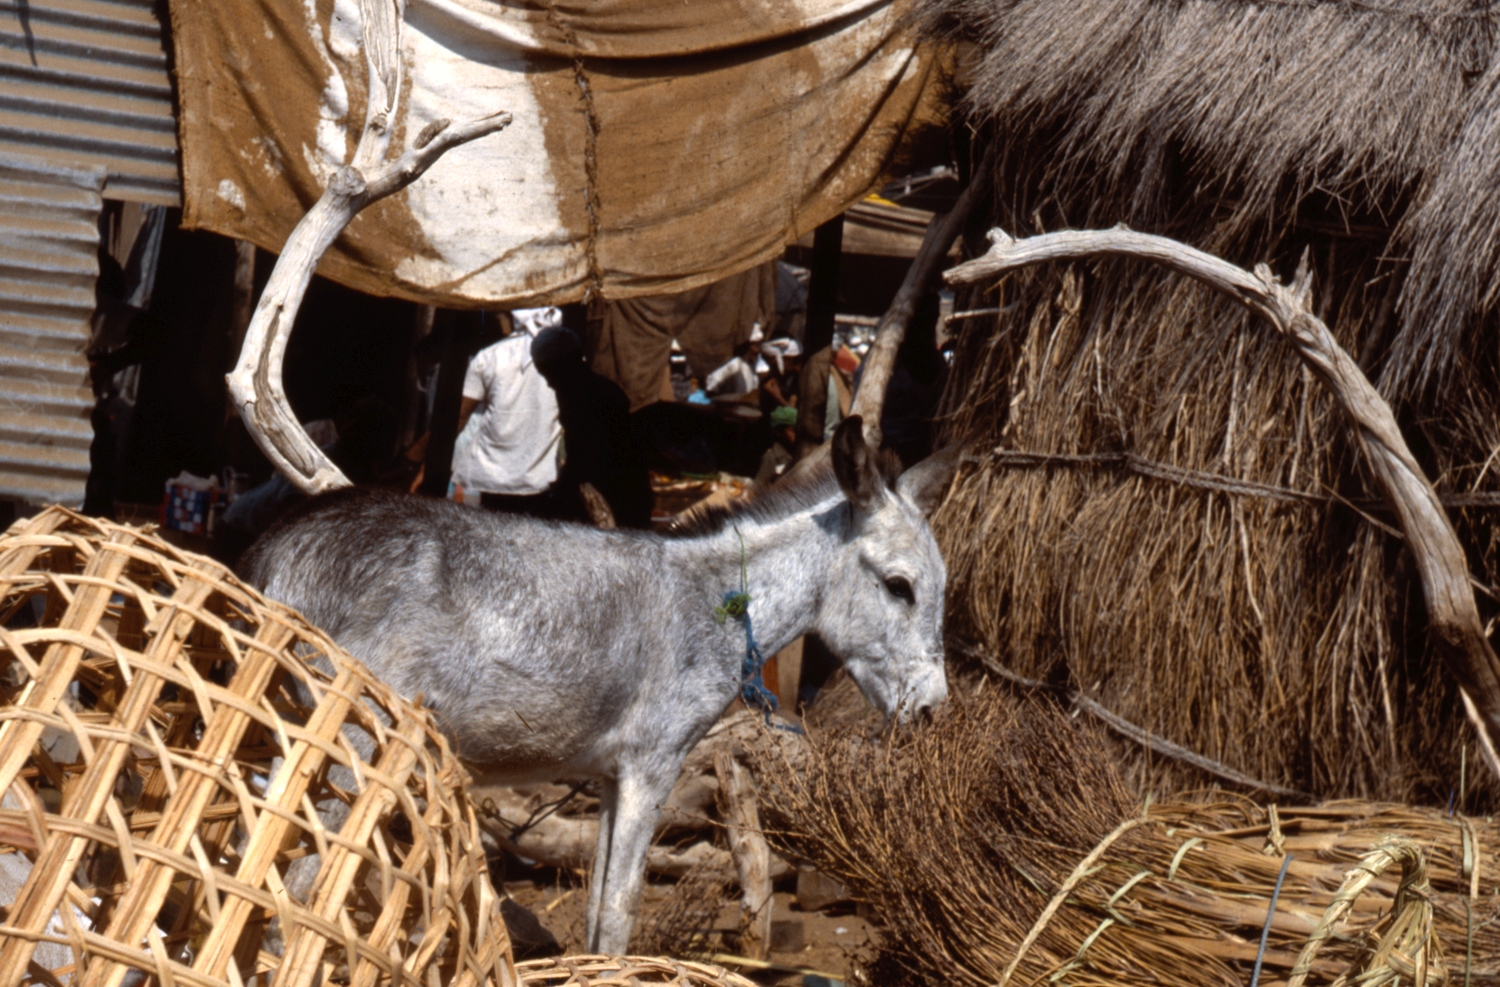 Zabid Market. Tihama region. View of a donkey in the market.